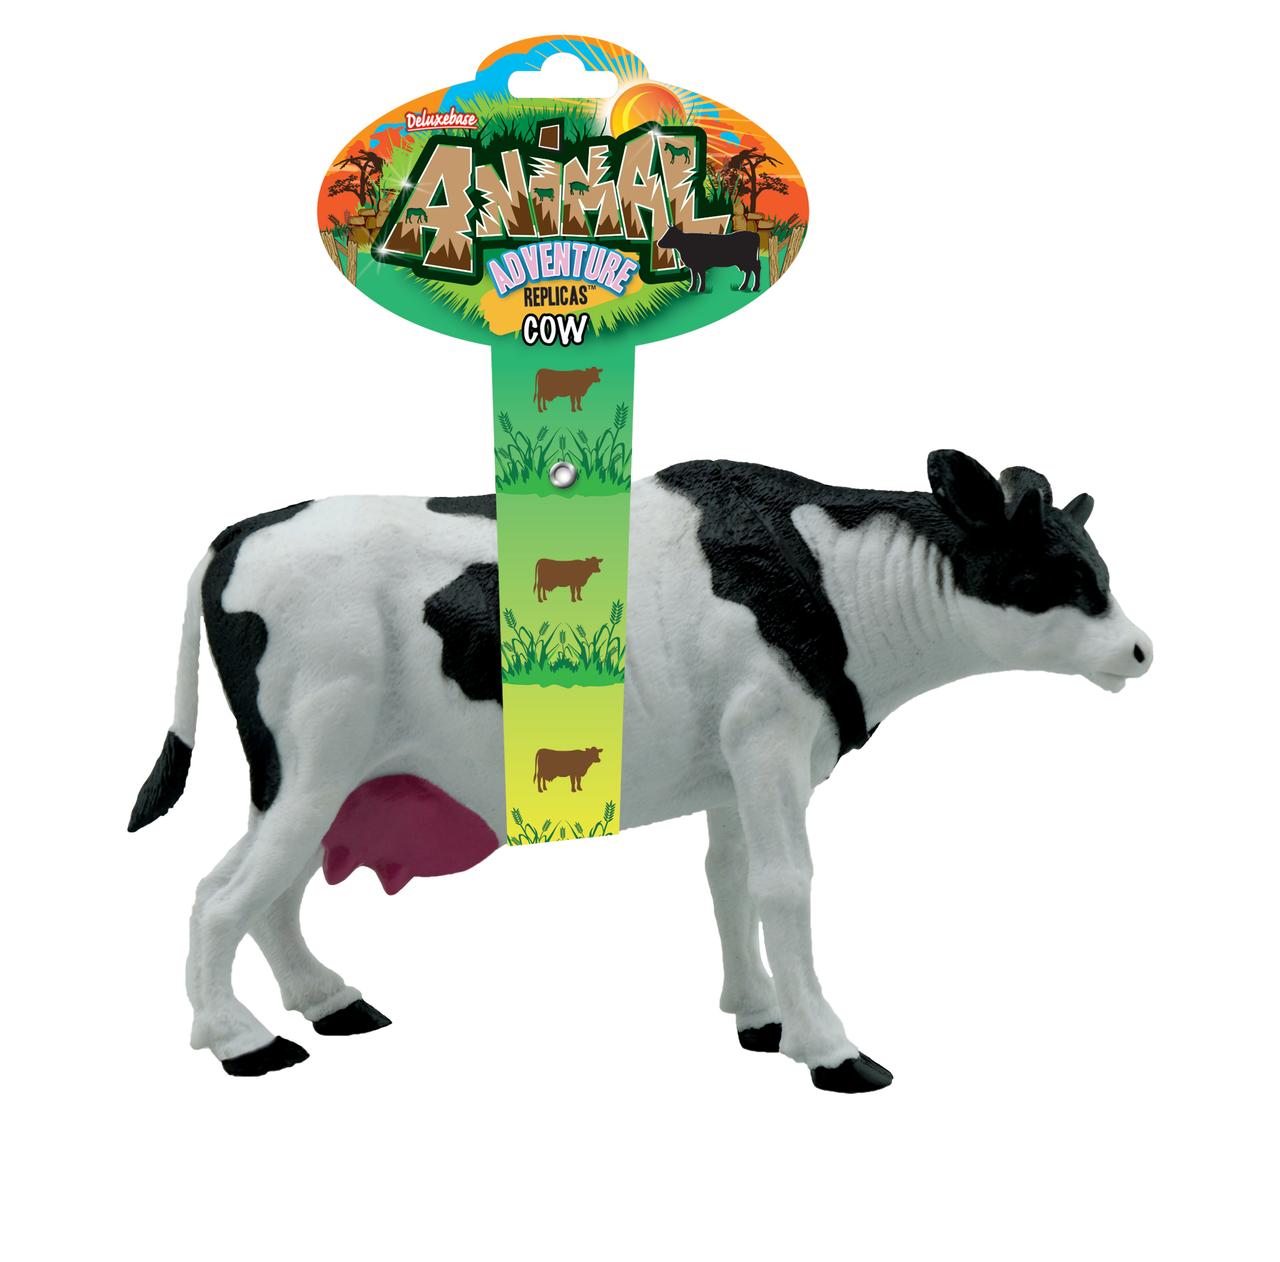 Animal Adventure Replicas - Cow